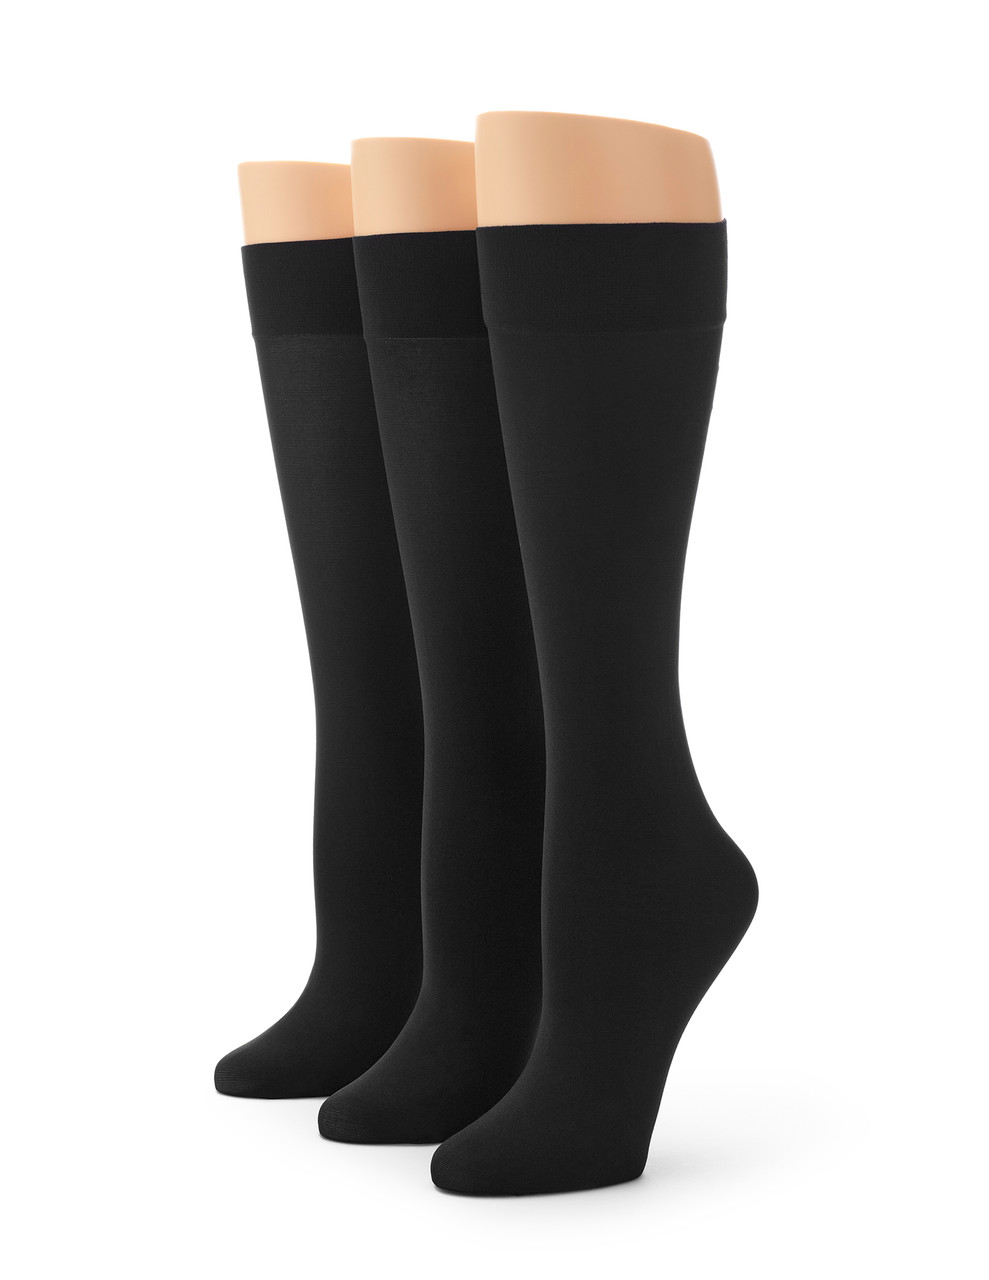 No nonsense Socks Sheer Liner Stay-put Heel Beige Size 4-10 - 3